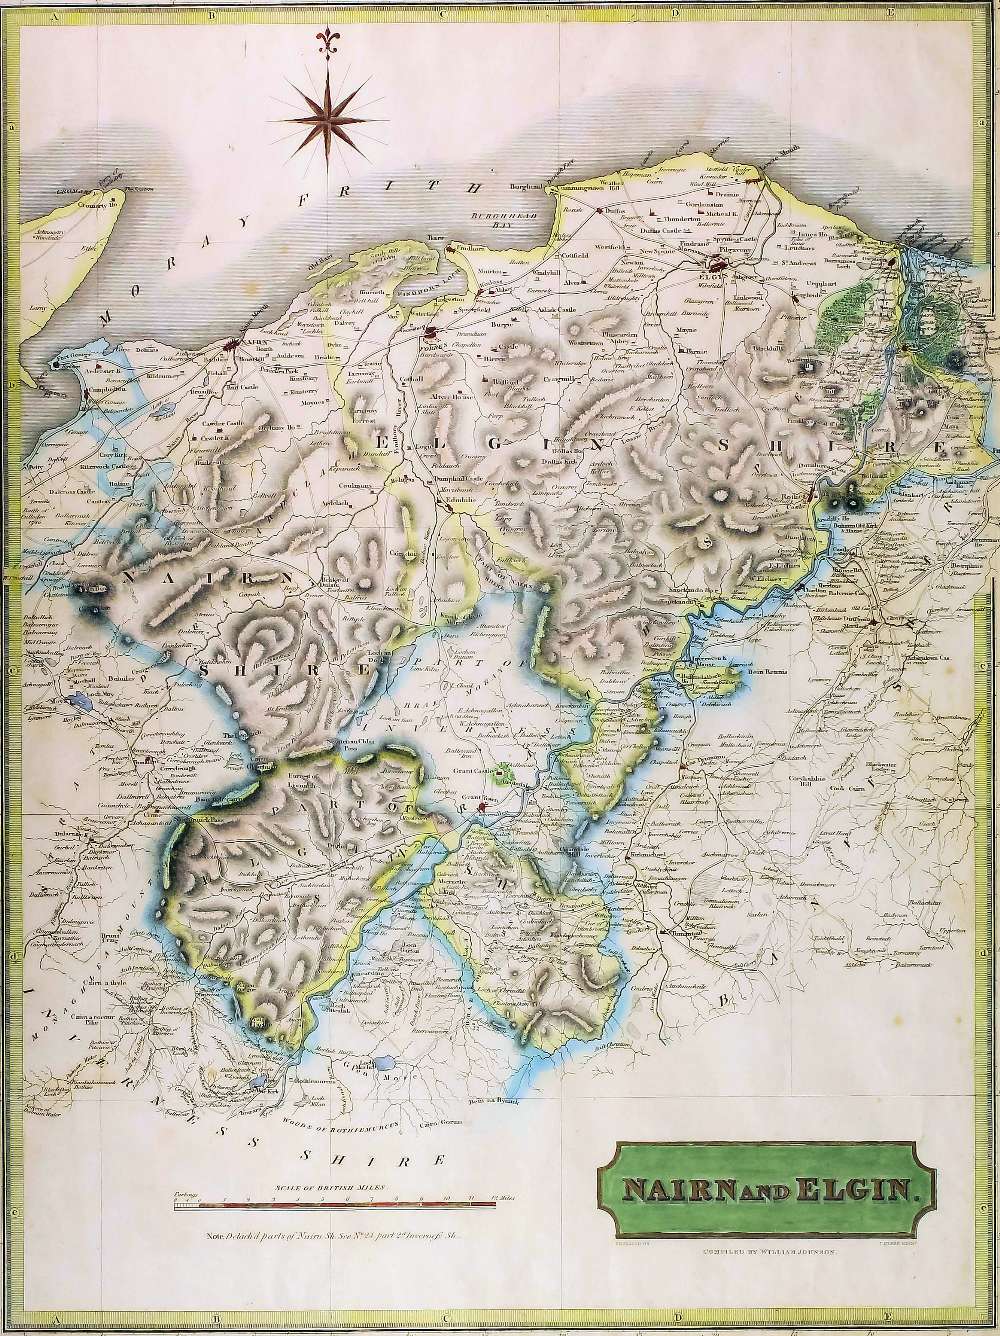 John Thomson (1777-circa 1840) and William Johnson (fl. 1806-1840) - Coloured engraving - Map - "